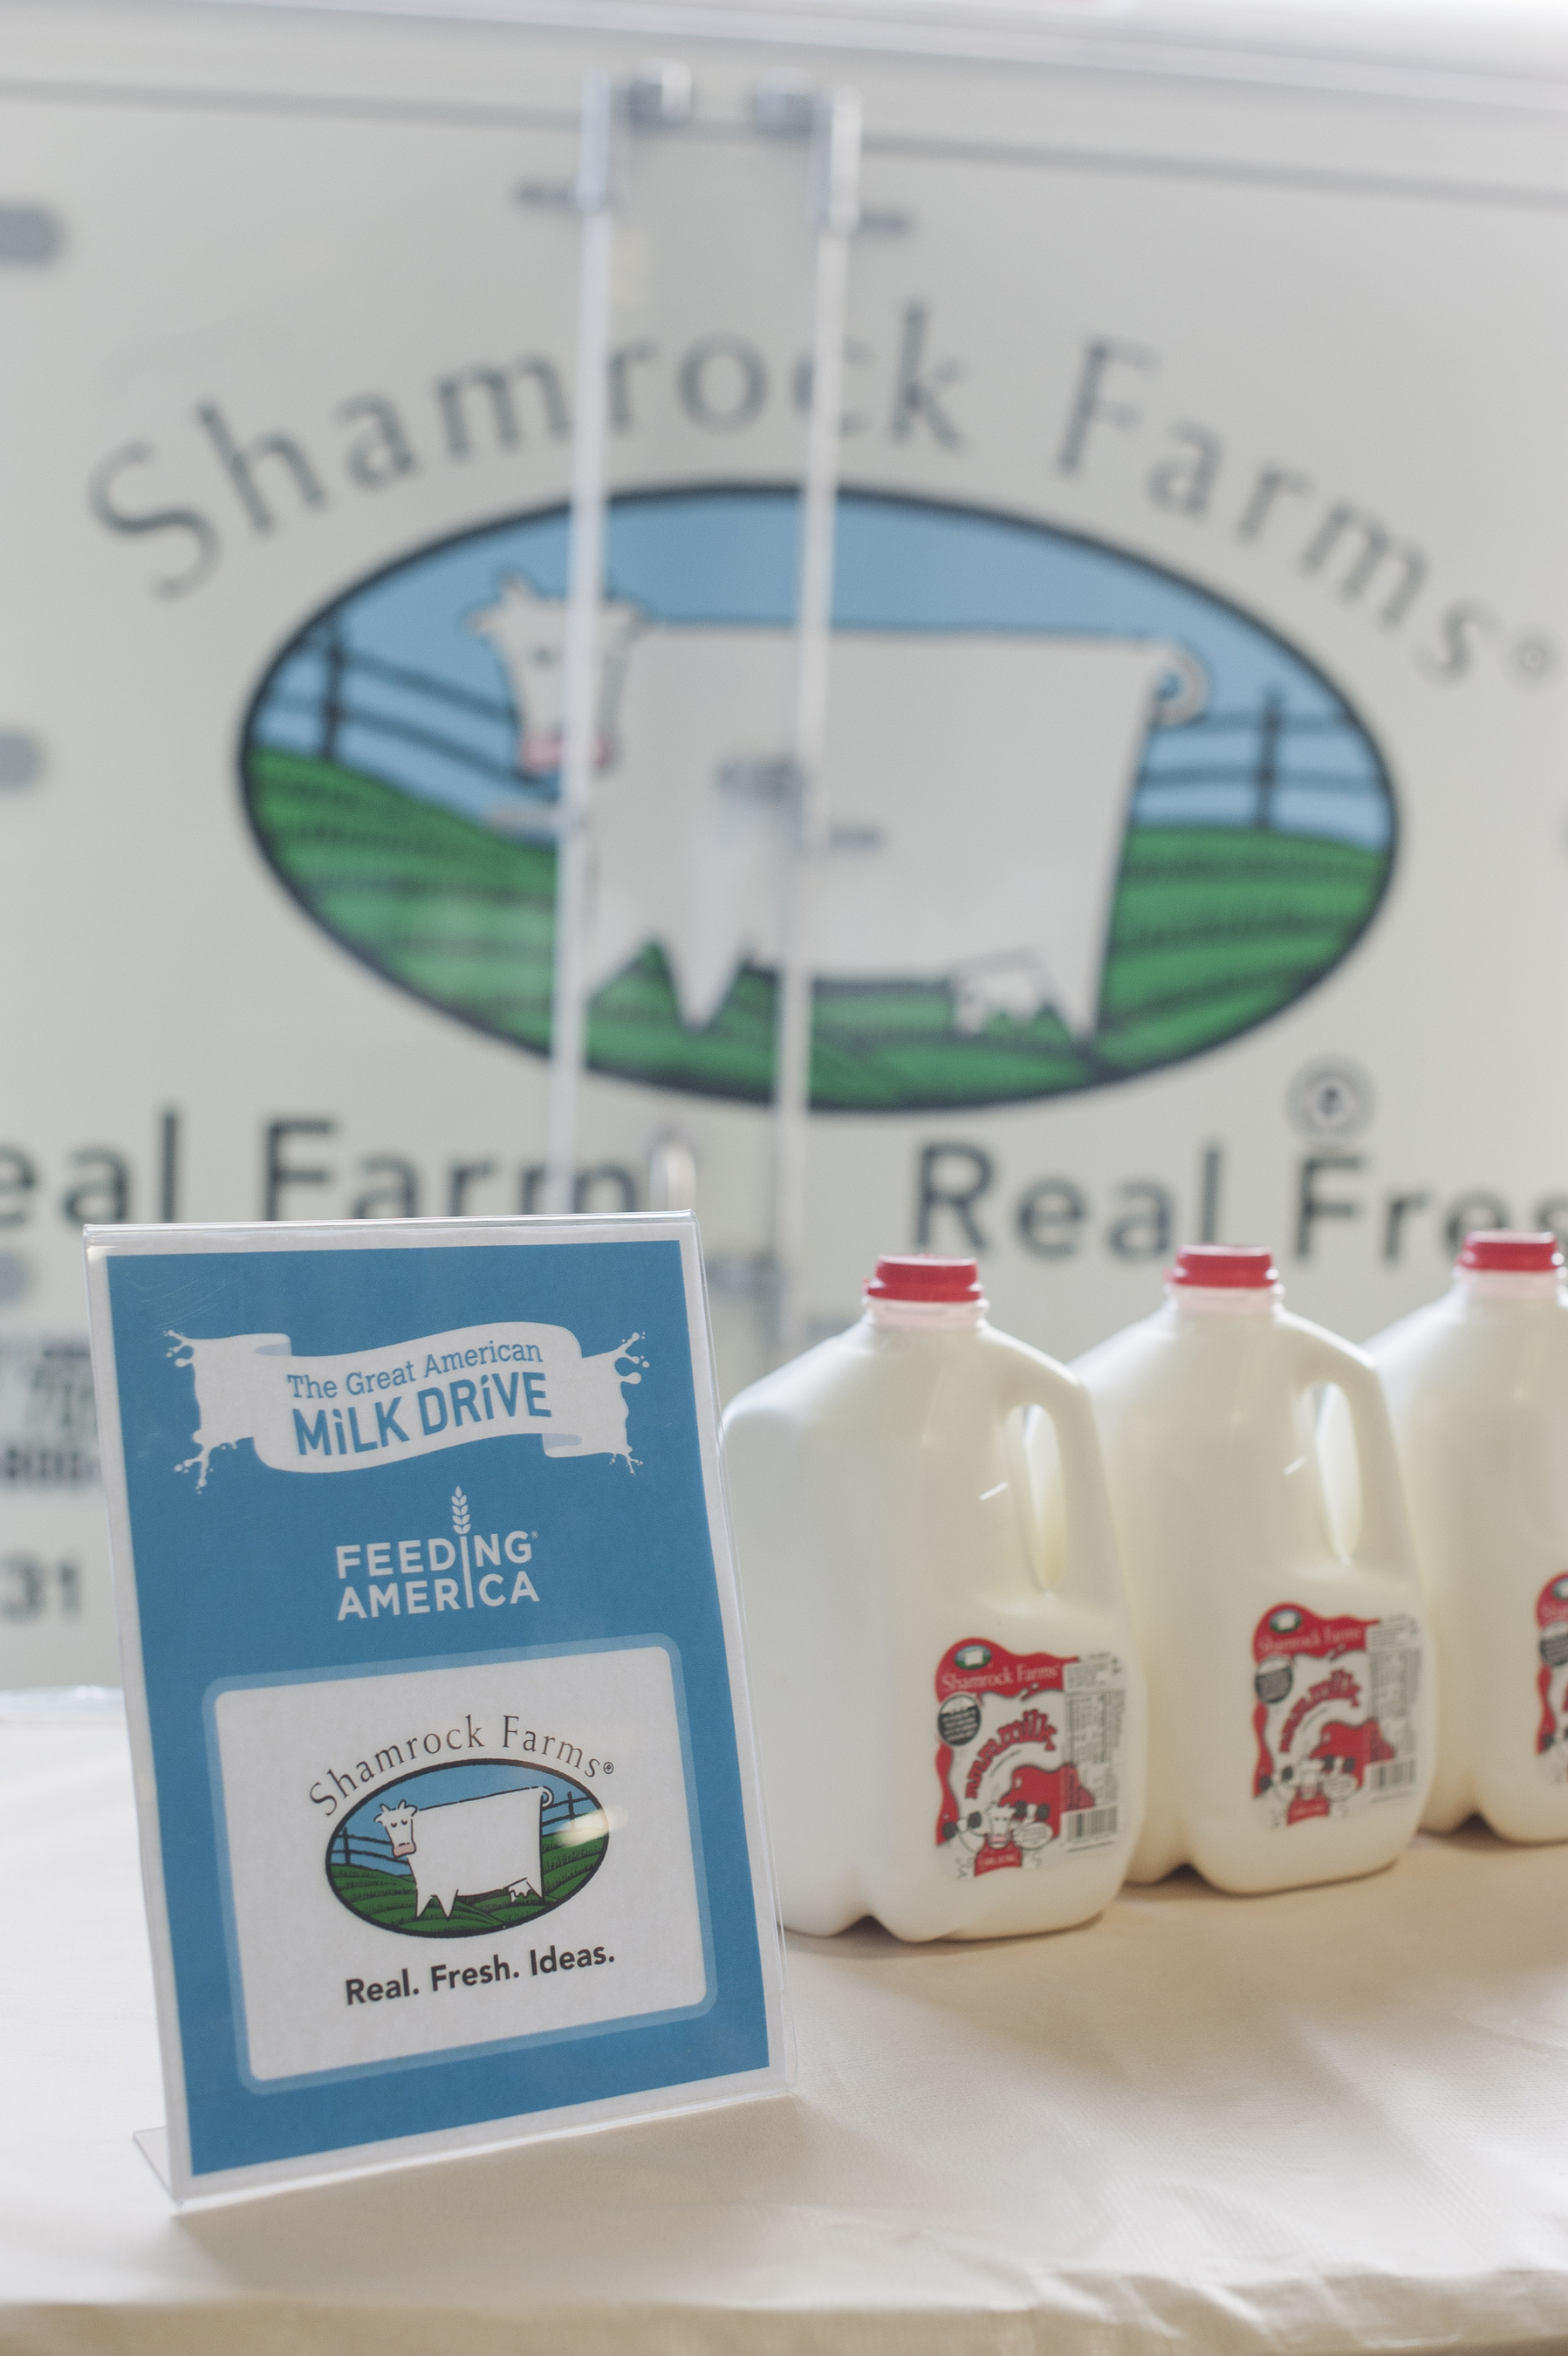 Shamrock Farms kicked off Great American Milk Drive efforts in Arizona with a 500-gallon donation to St. Mary's Food Bank Alliance. (PRNewsFoto/Shamrock Farms)